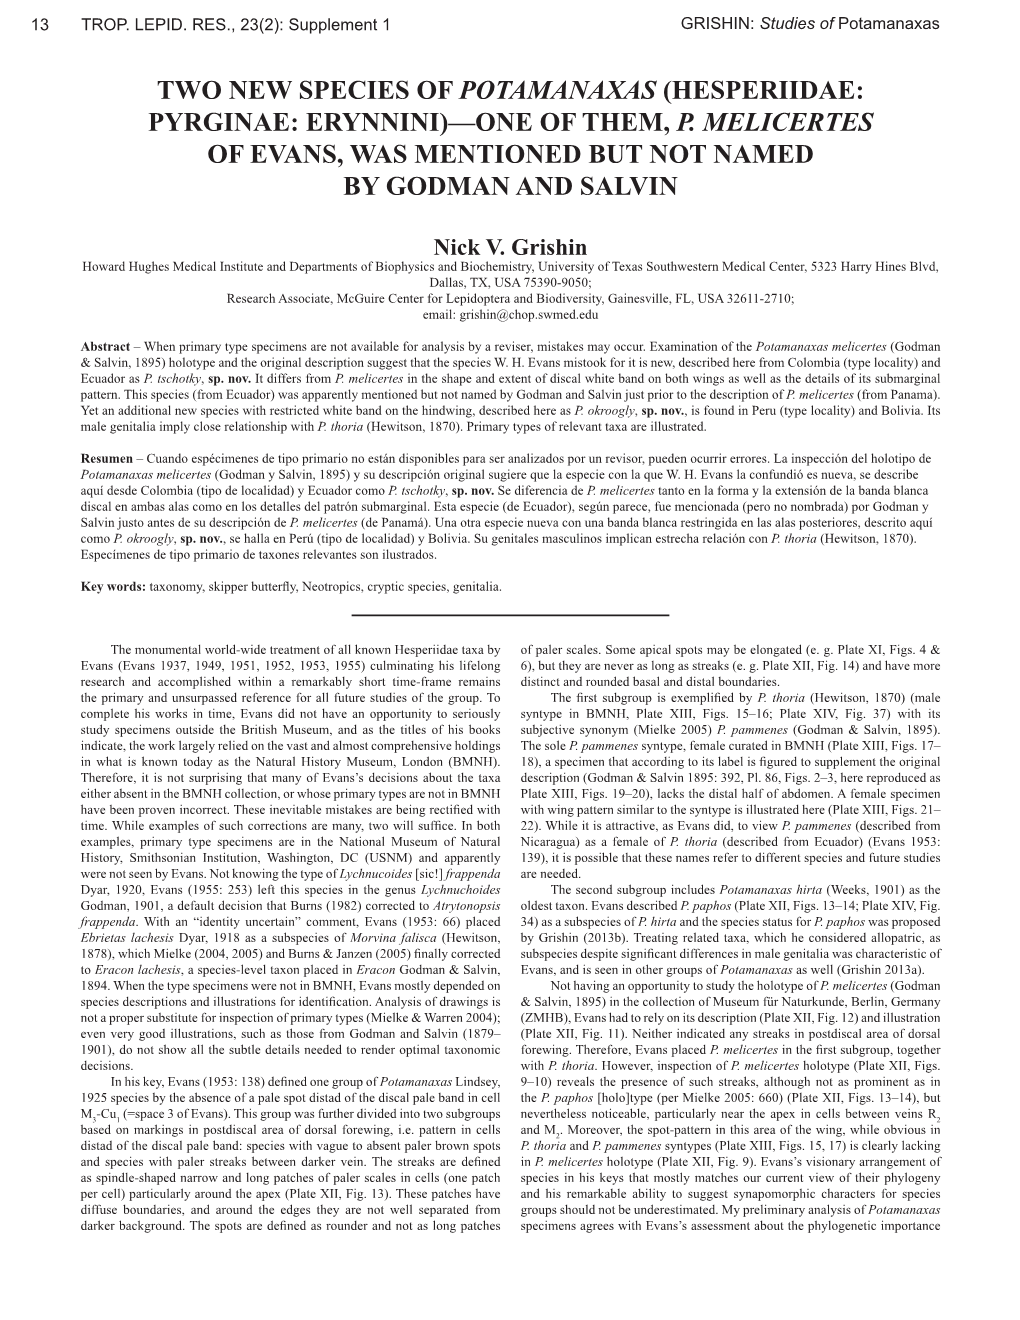 GRISHIN: Studies of Potamanaxas